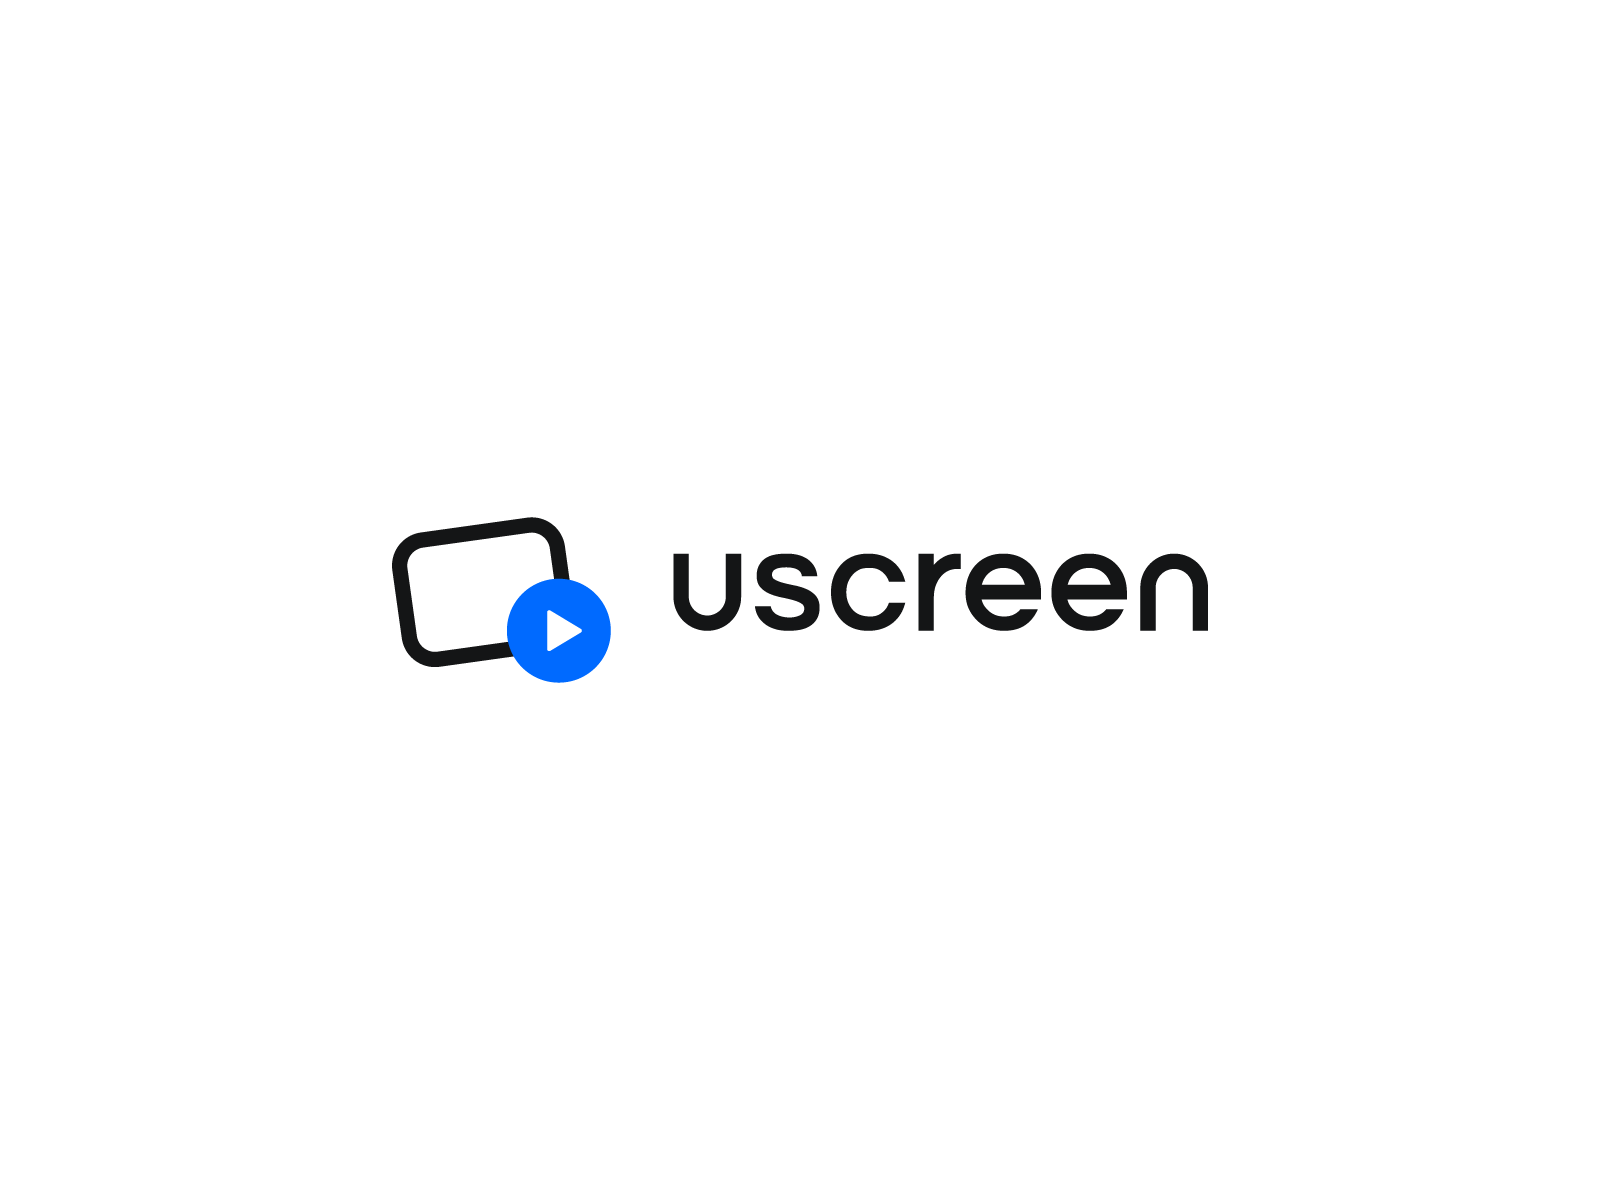 Uscreen Logo by Danilo Tanic on Dribbble